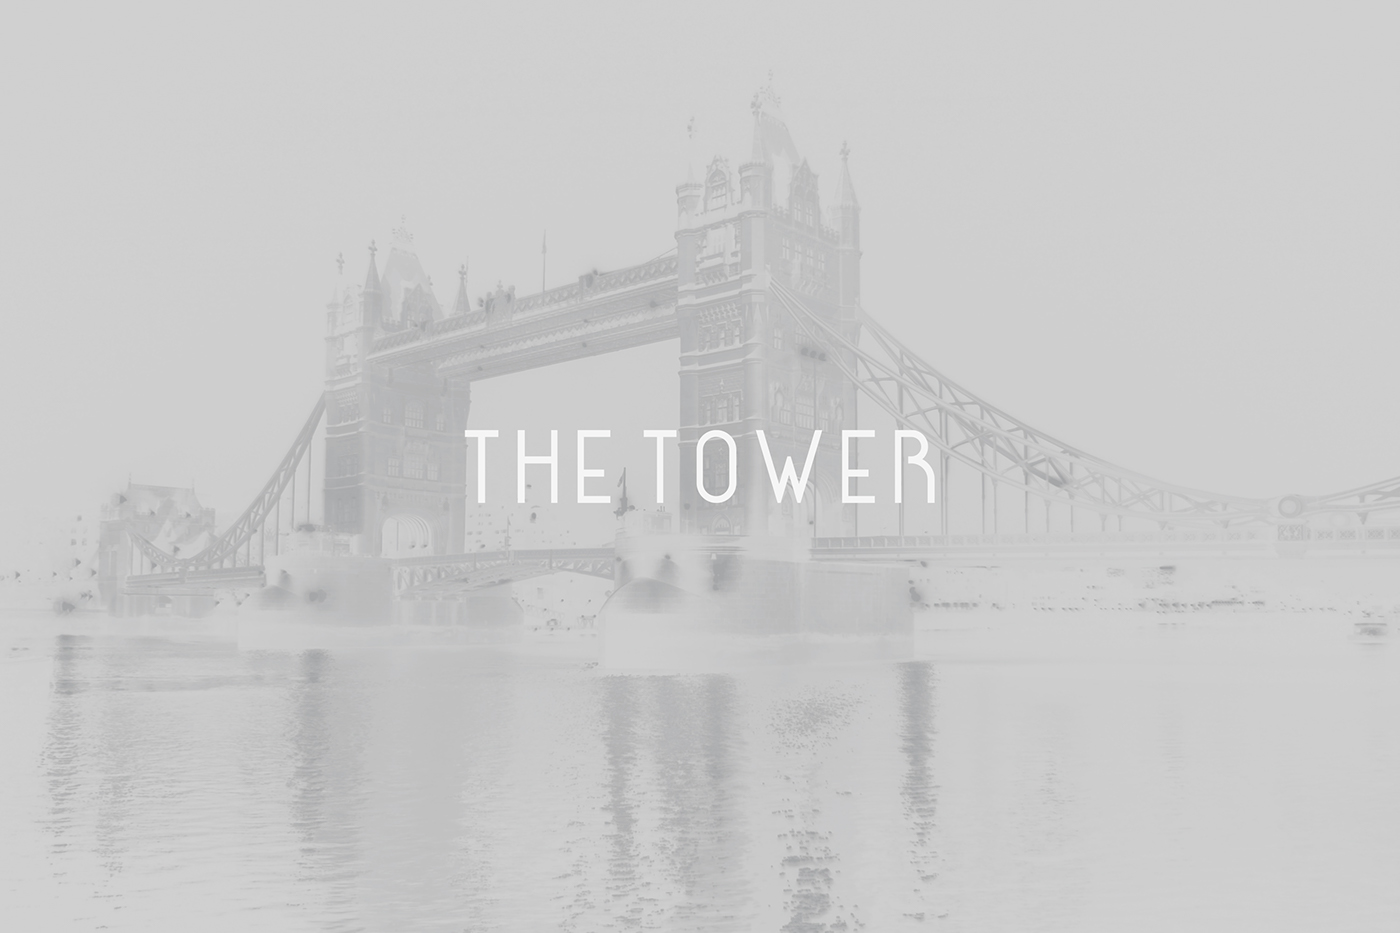 London Typeface The British Museum the tower Albert bridge Madame Tassauds grey White font